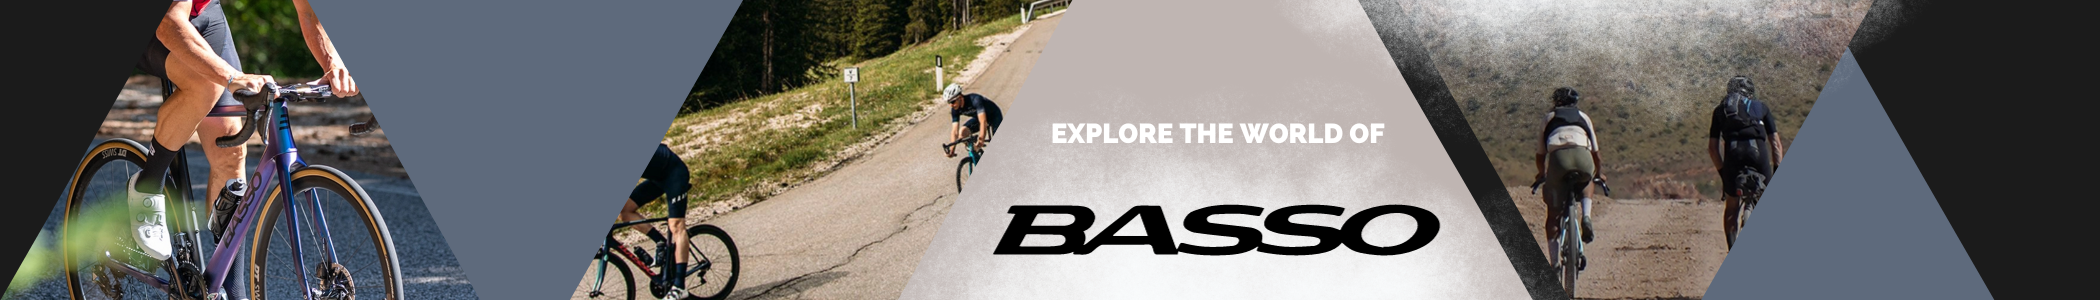 Explore the world of Basso!